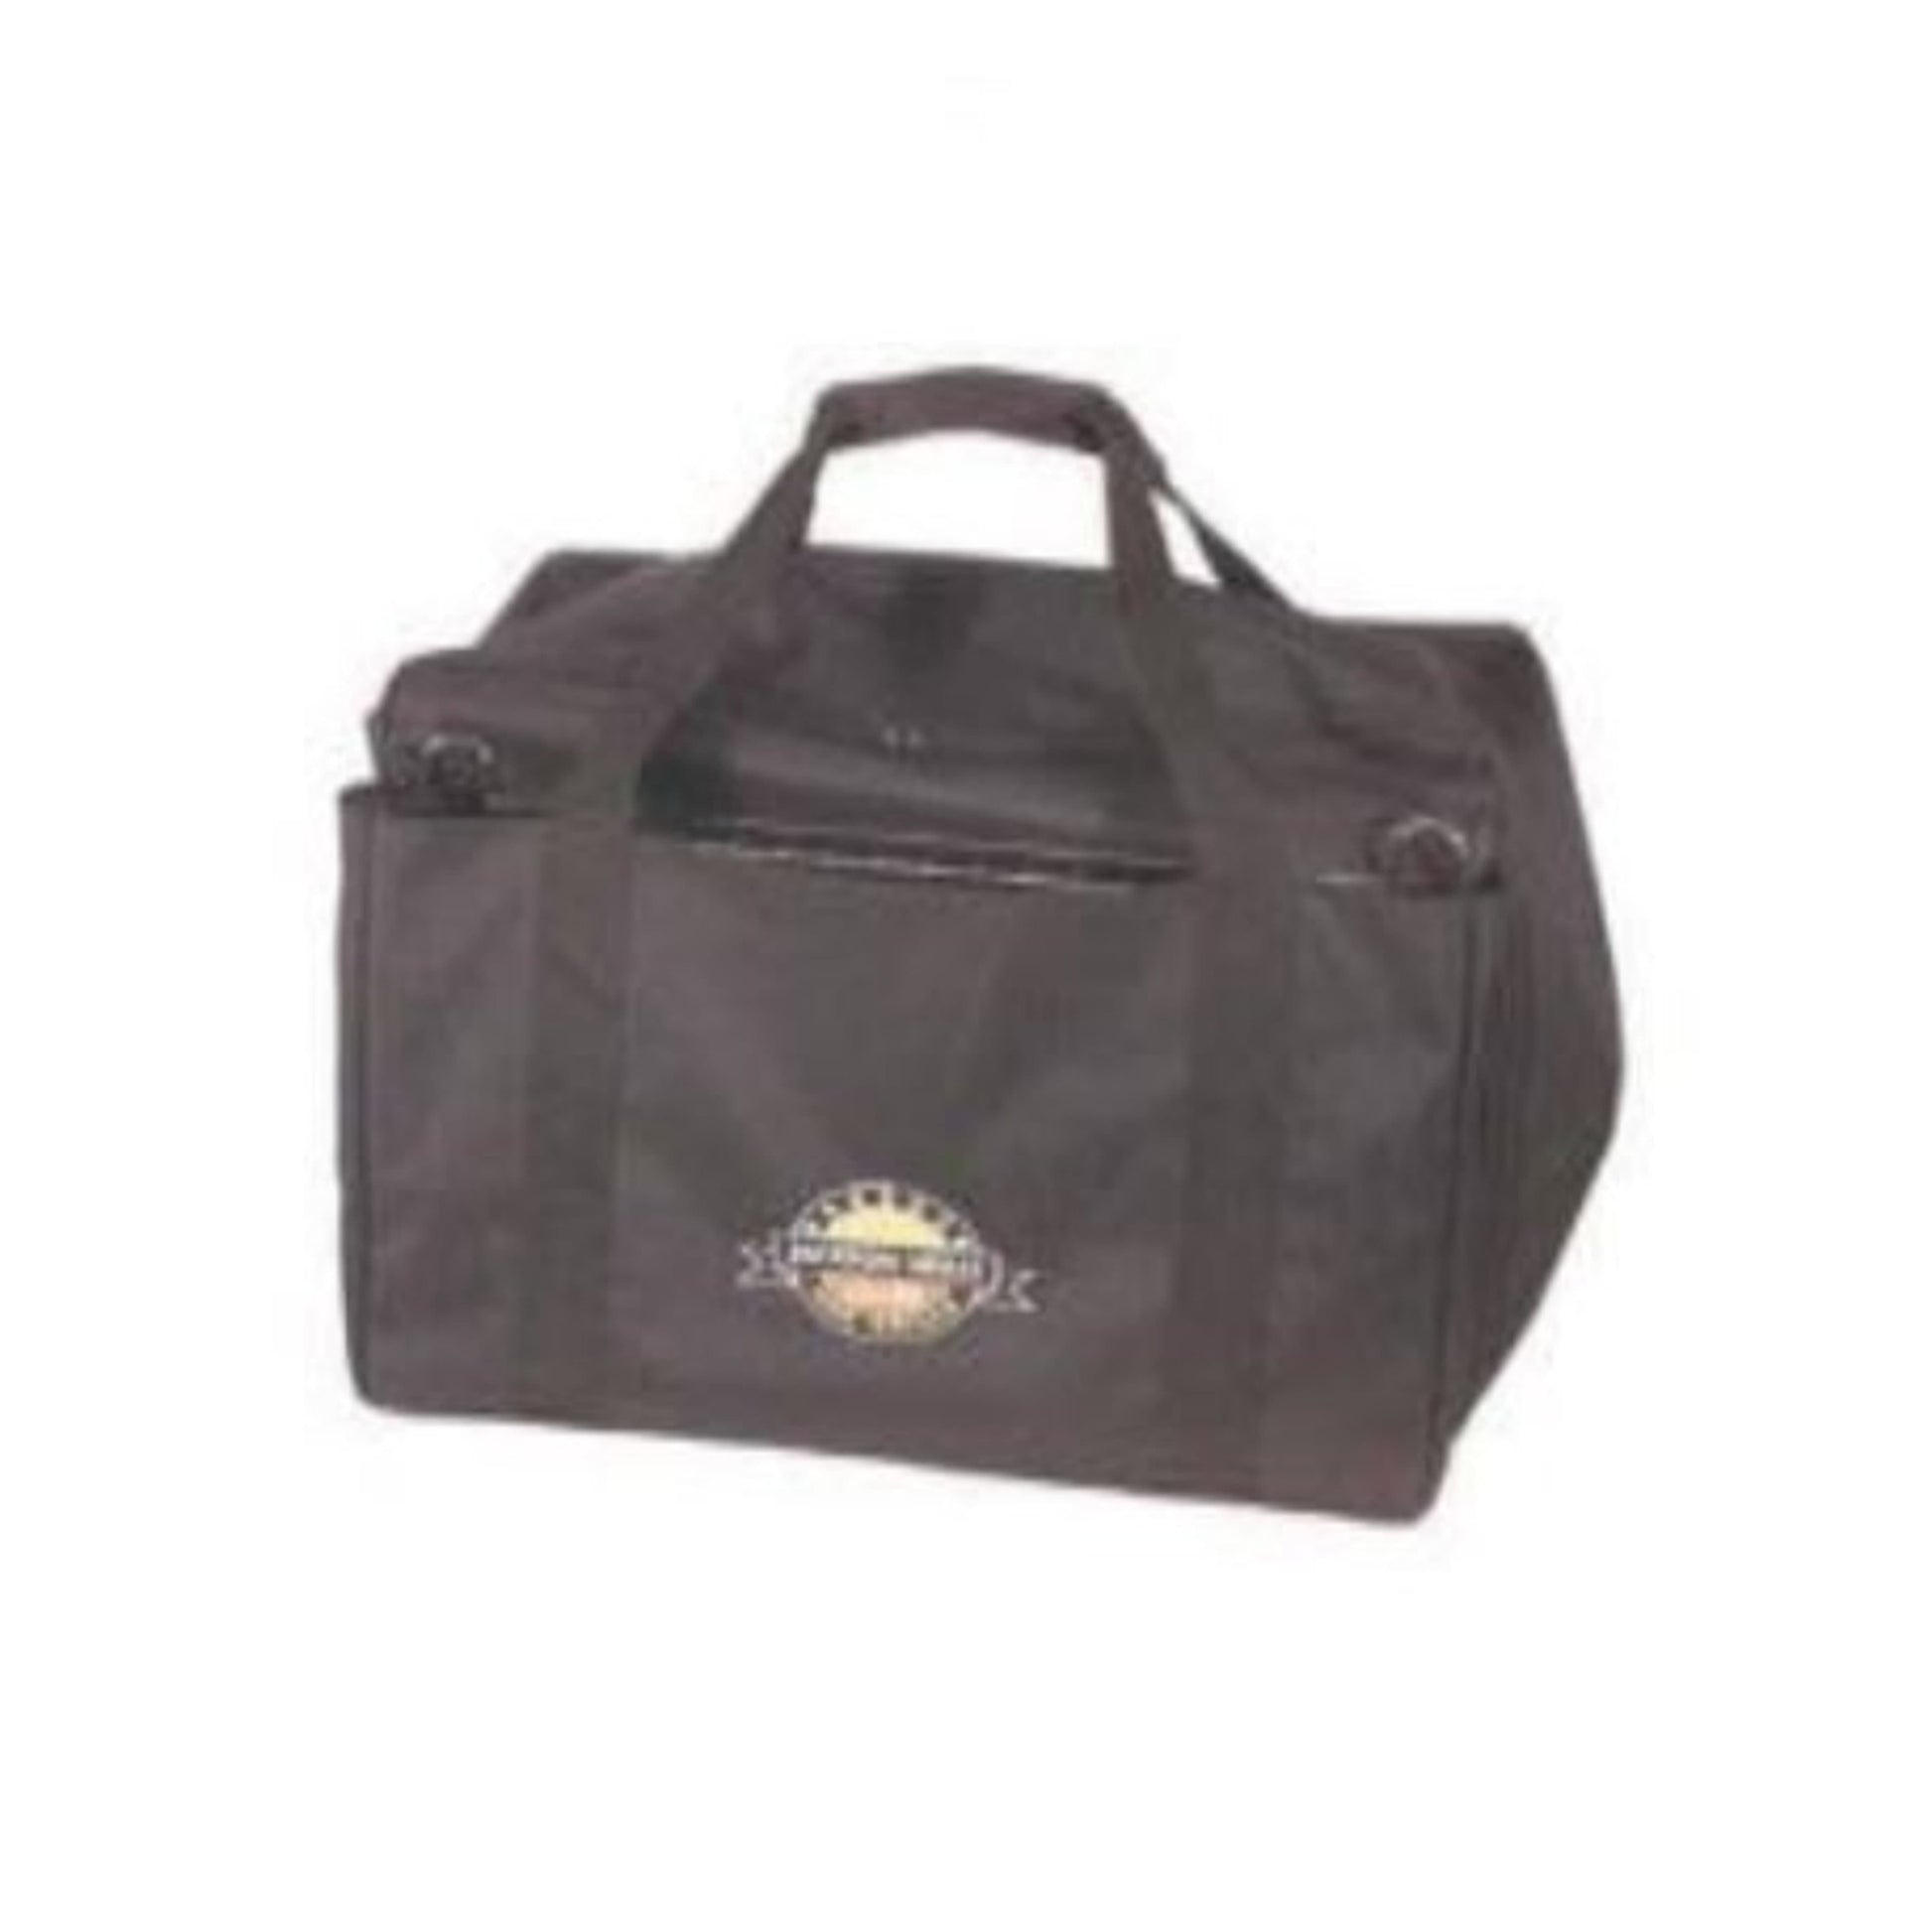 Jackson Grills Versa 100 Series Carry Bag